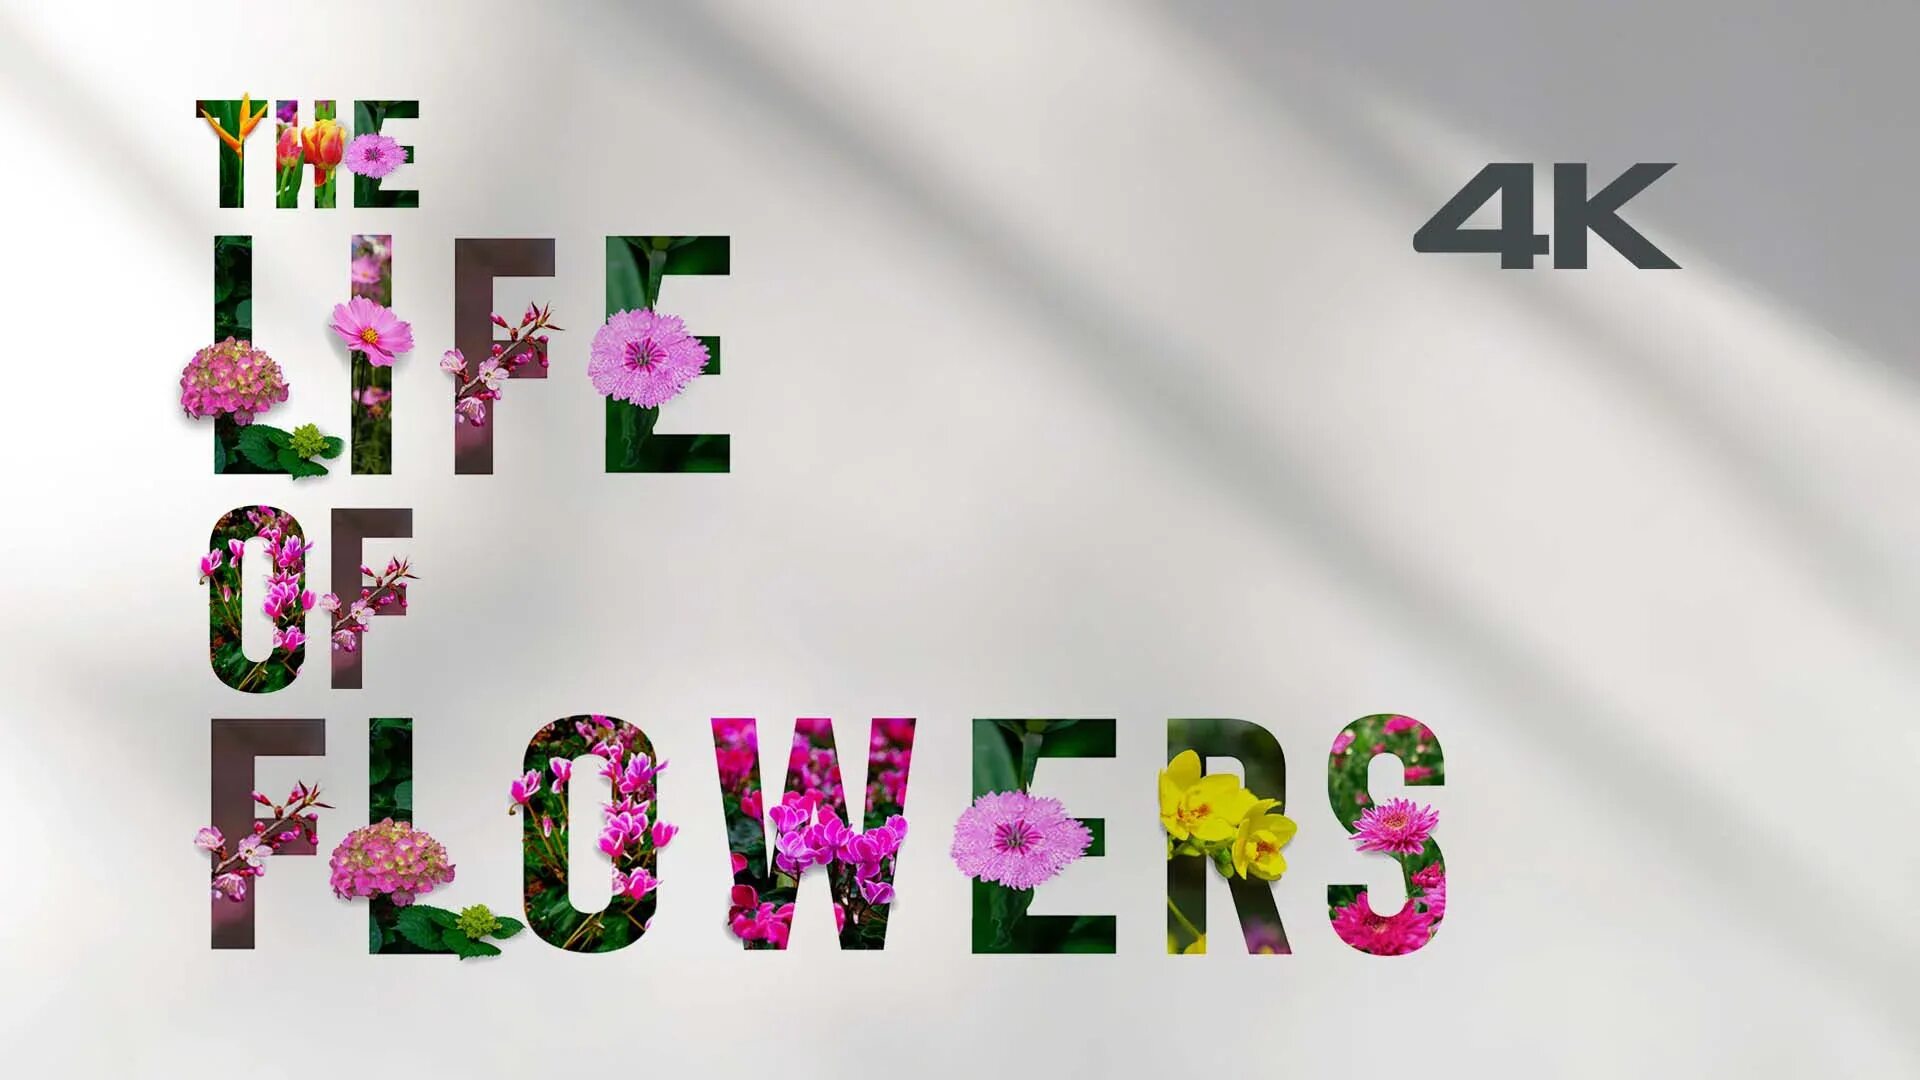 The Flower of Life. My Life цветы. Панама Flower of Life. Are flowers of life